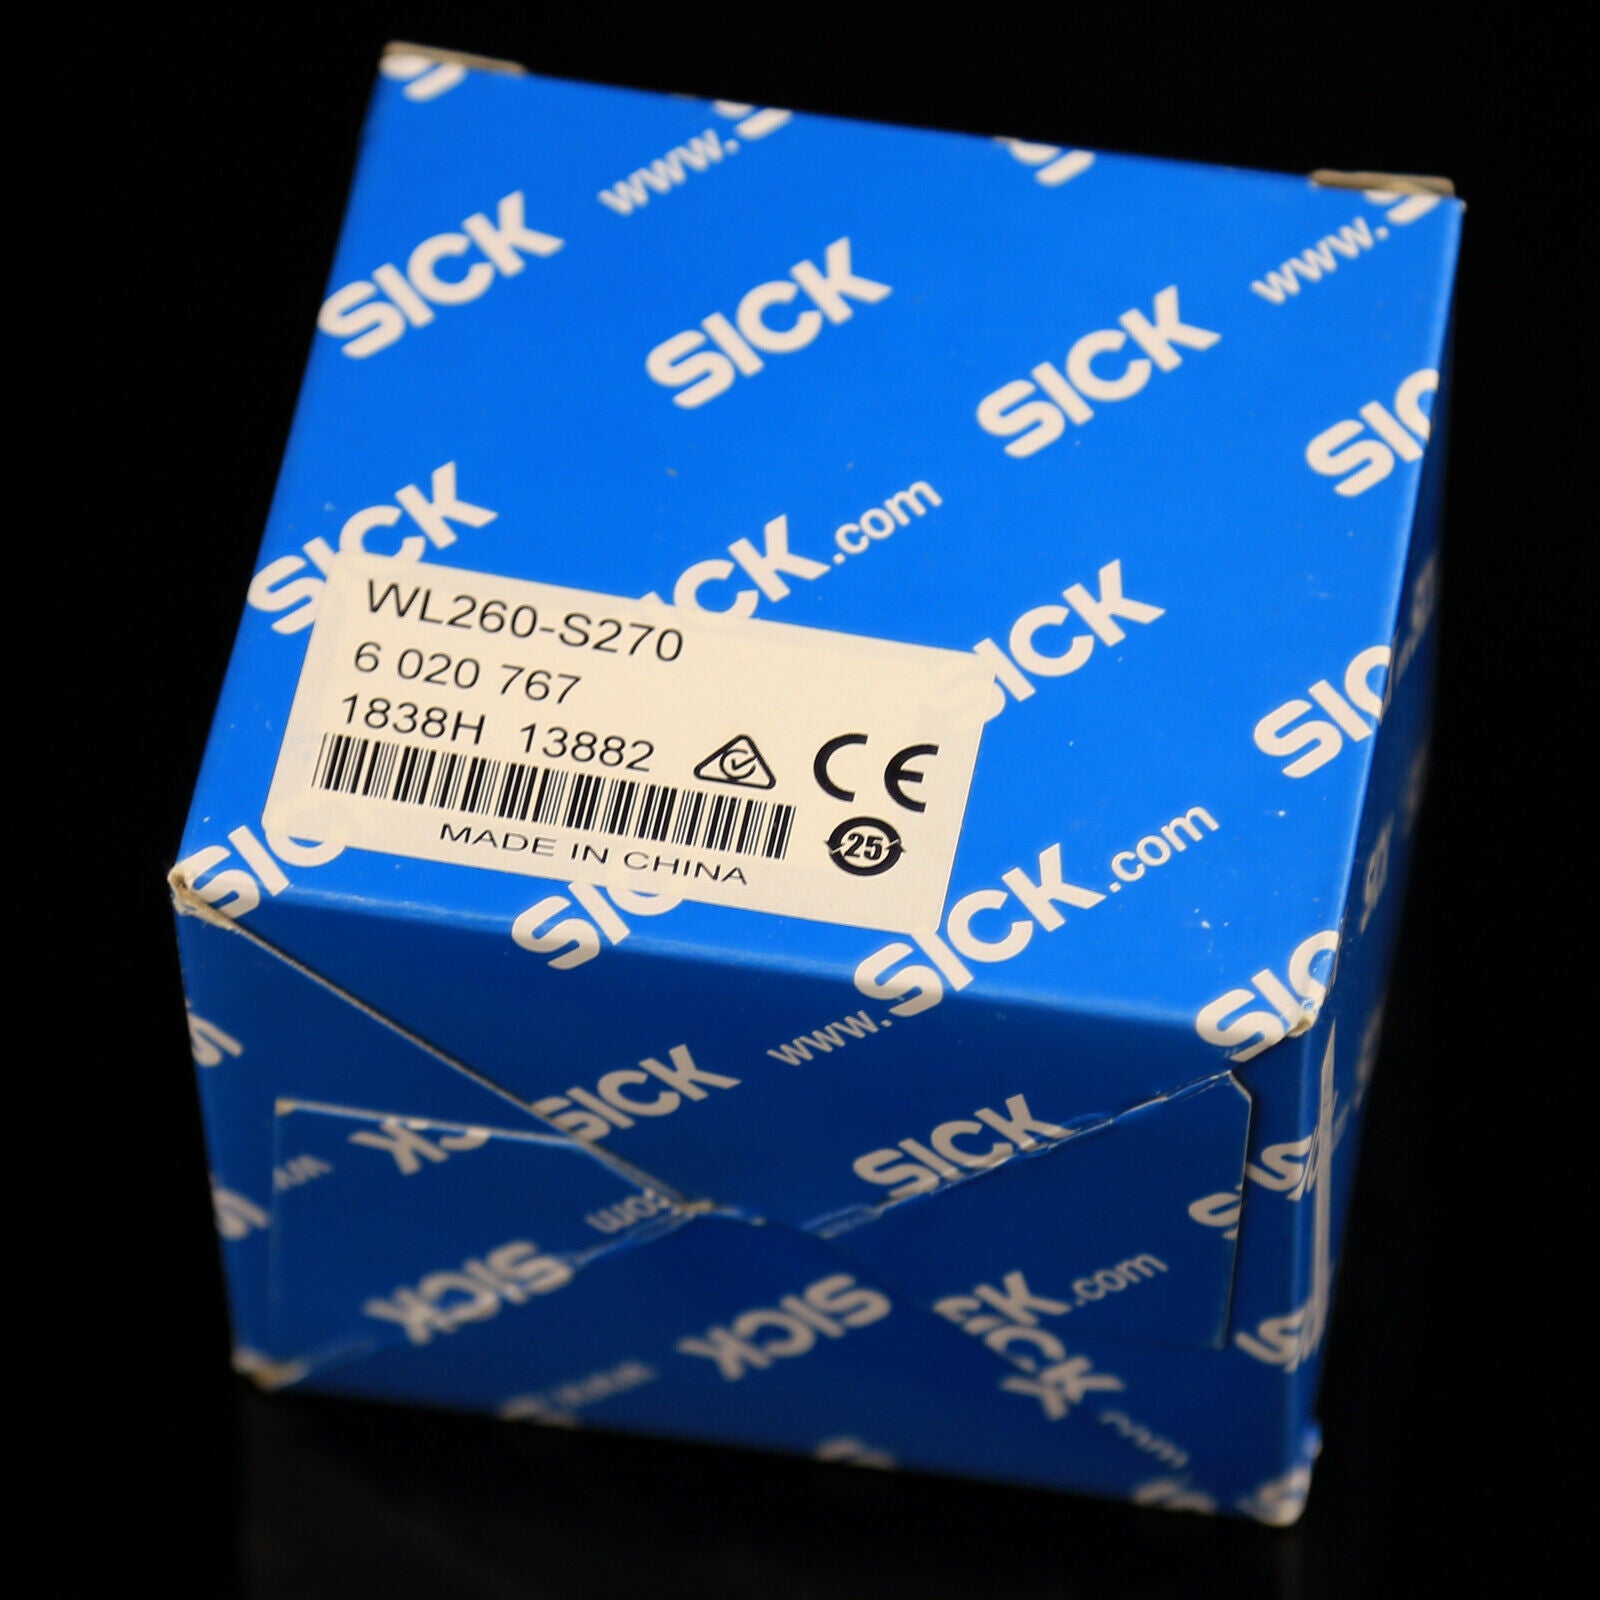 Sick WL260-S270 Photoelectric Sensor